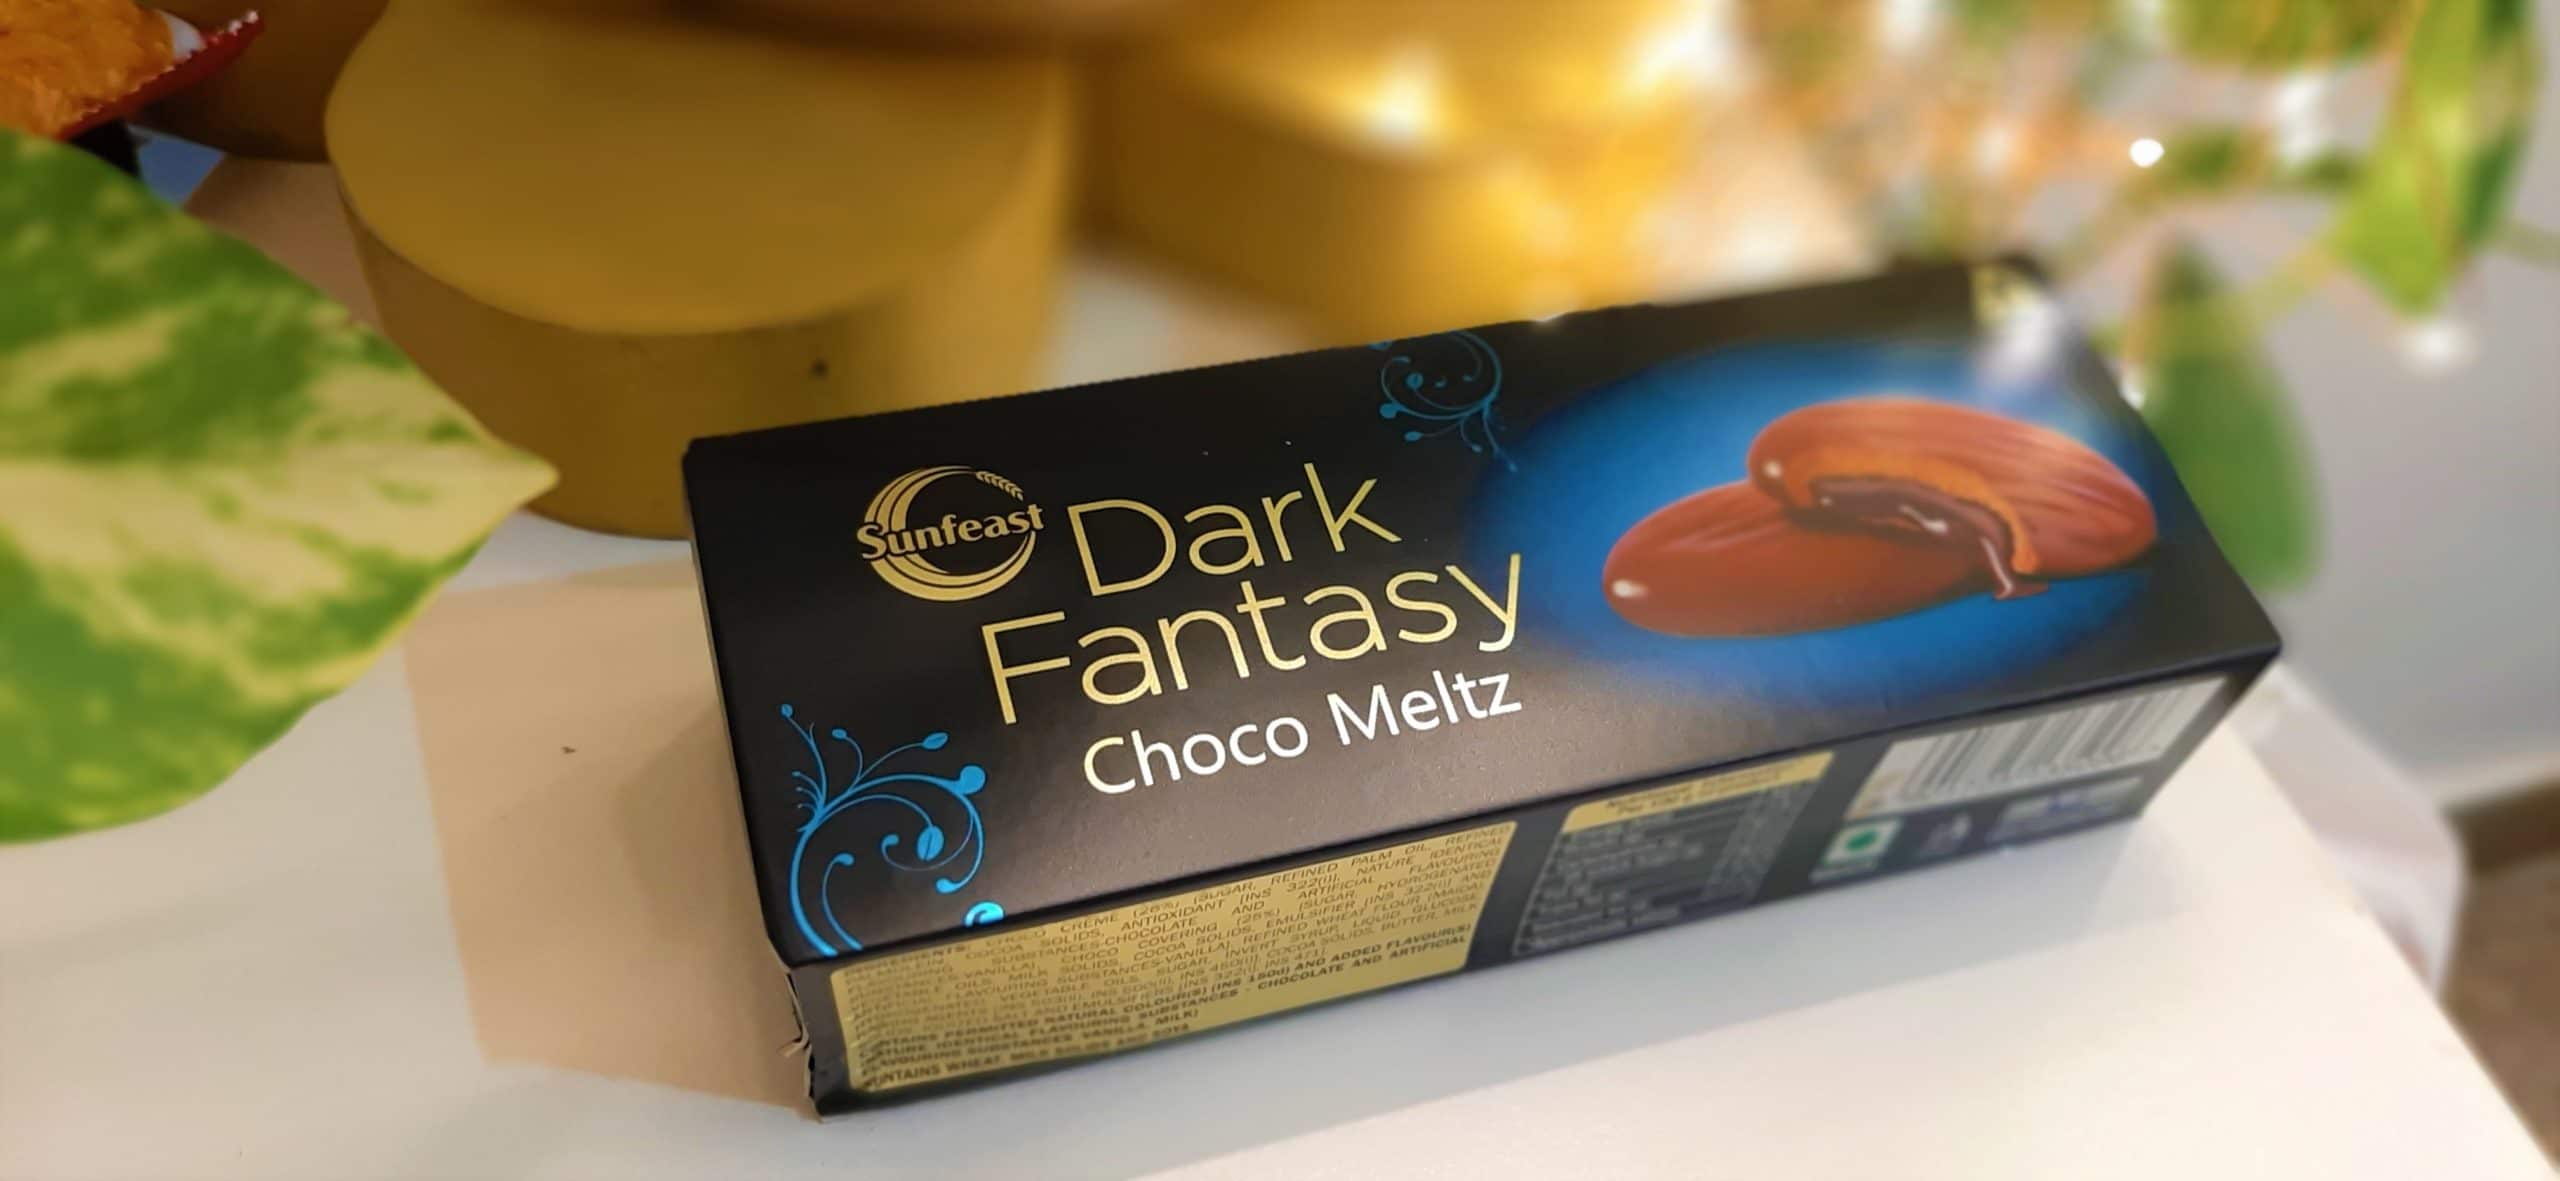 Sunfeast Dark Fantasy Choco Meltz-mishry